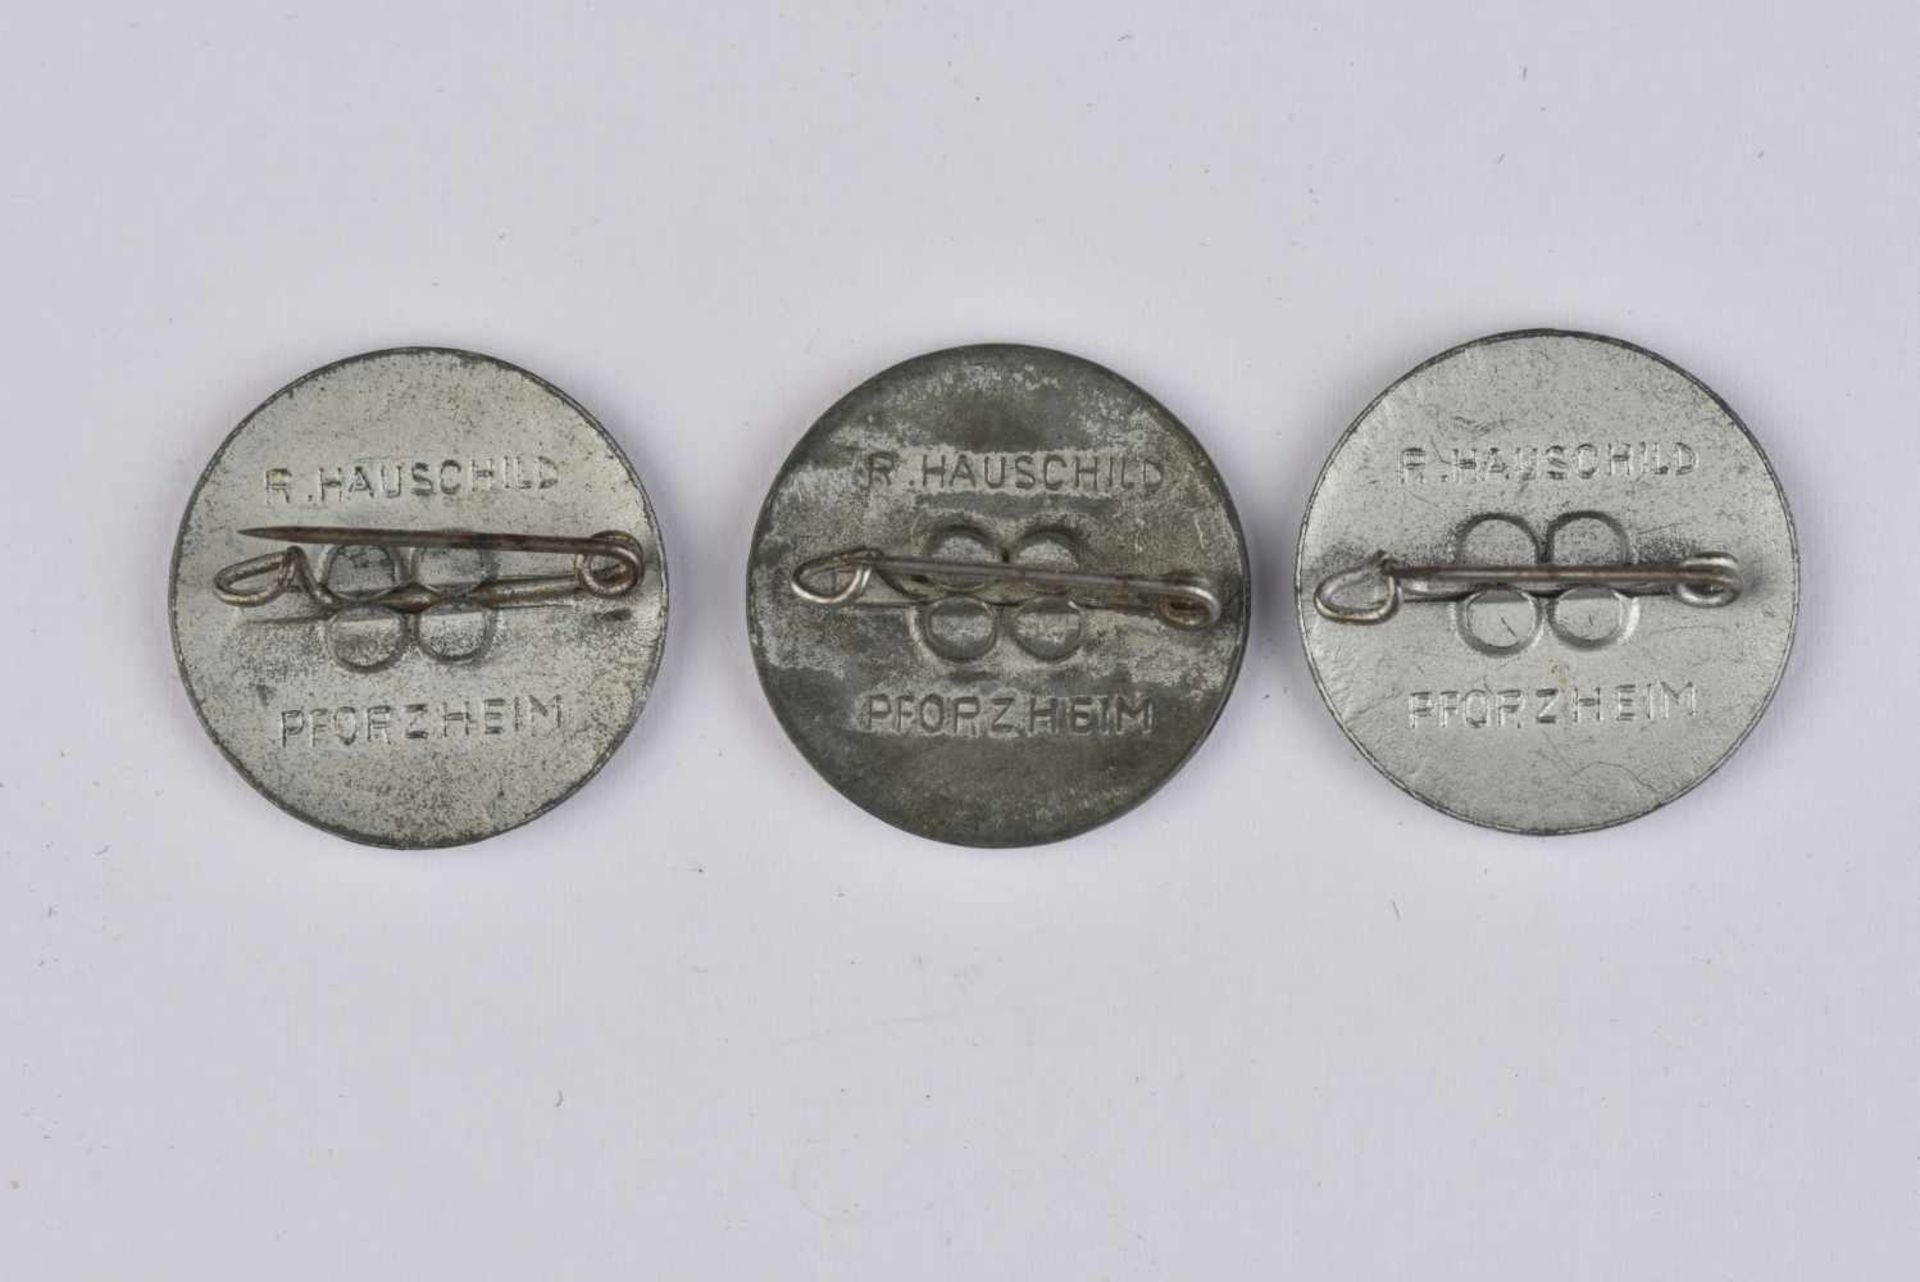 Insignes Elsass Opfering En métal, complet avec leurs attaches, fabrication R Hauschild - Bild 2 aus 2